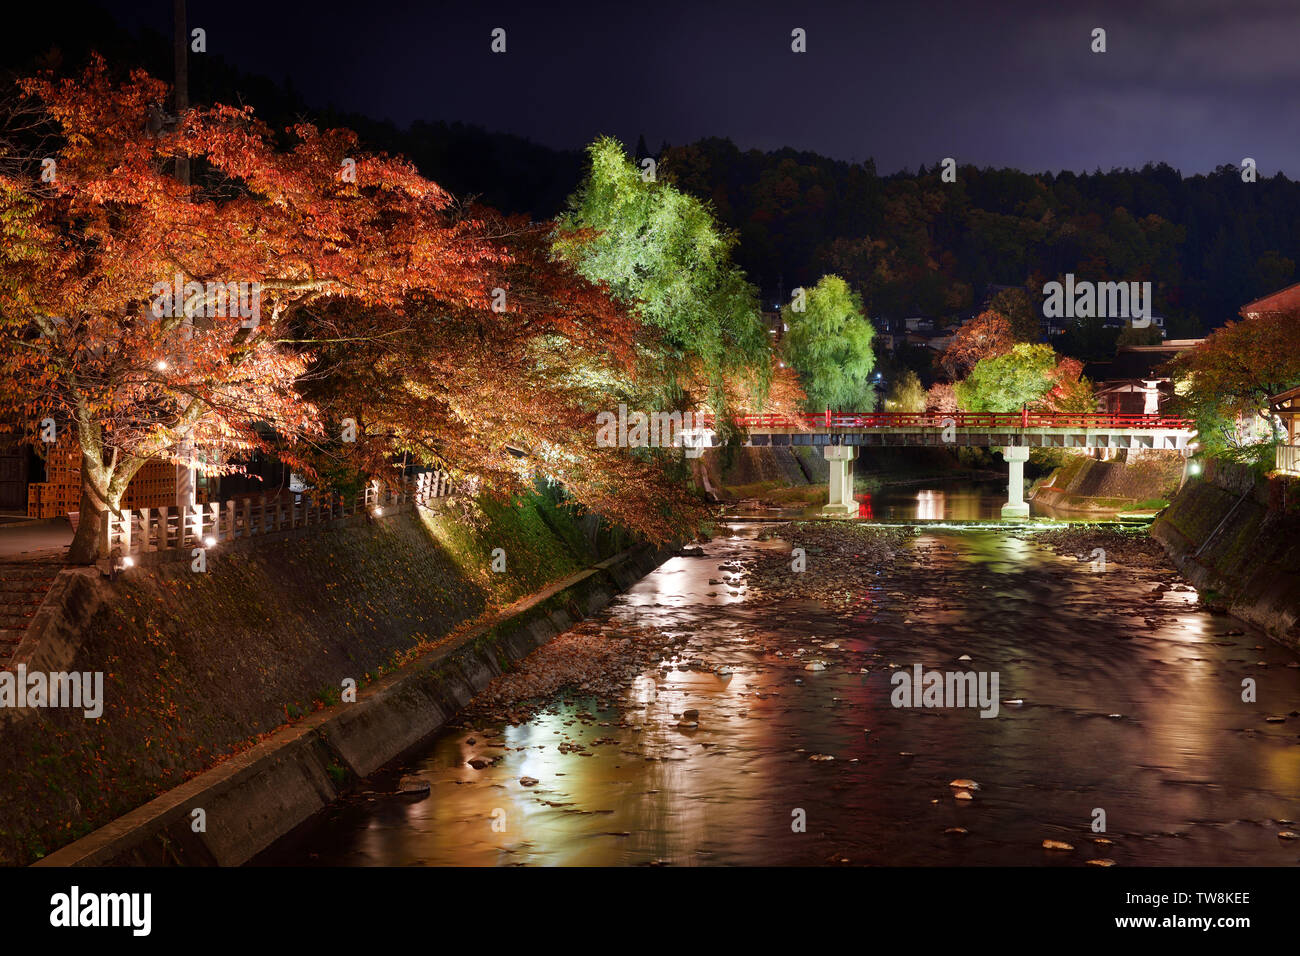 Nighttime autumn scenery of Miyagawa river in Takayama city with illuminated colorful red and green trees along the banks and red Nakahashi bridge Stock Photo